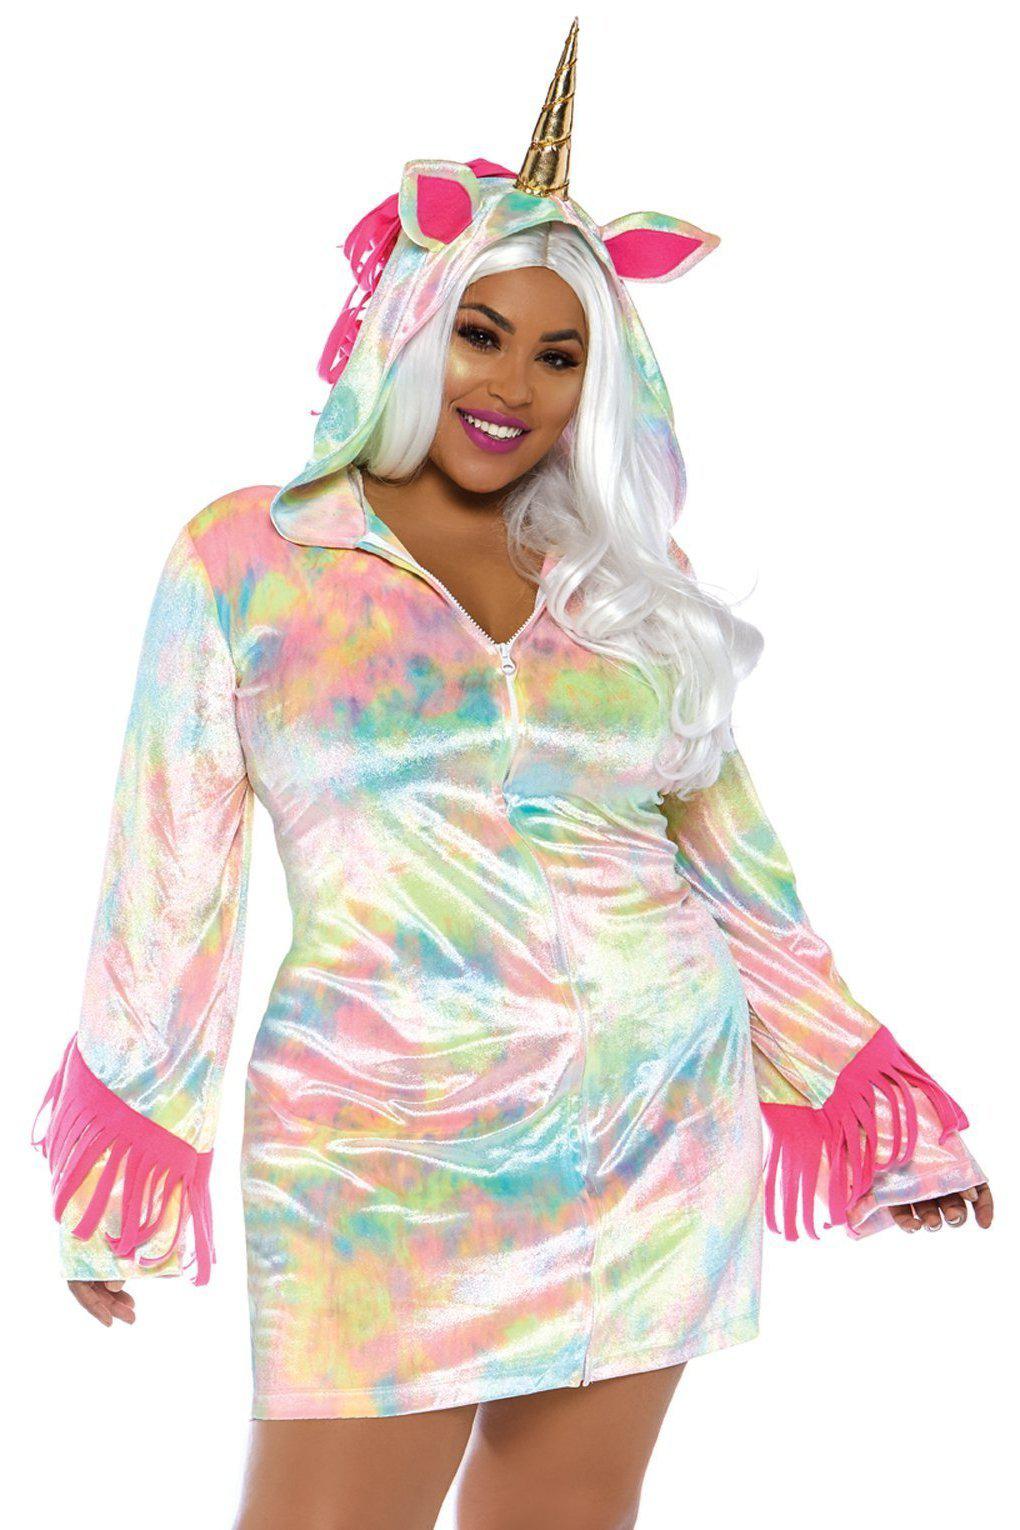 Plus Size Enchanted Unicorn Costume Dress-Animal Costumes-Leg Avenue-Multi-1/2XL-SEXYSHOES.COM